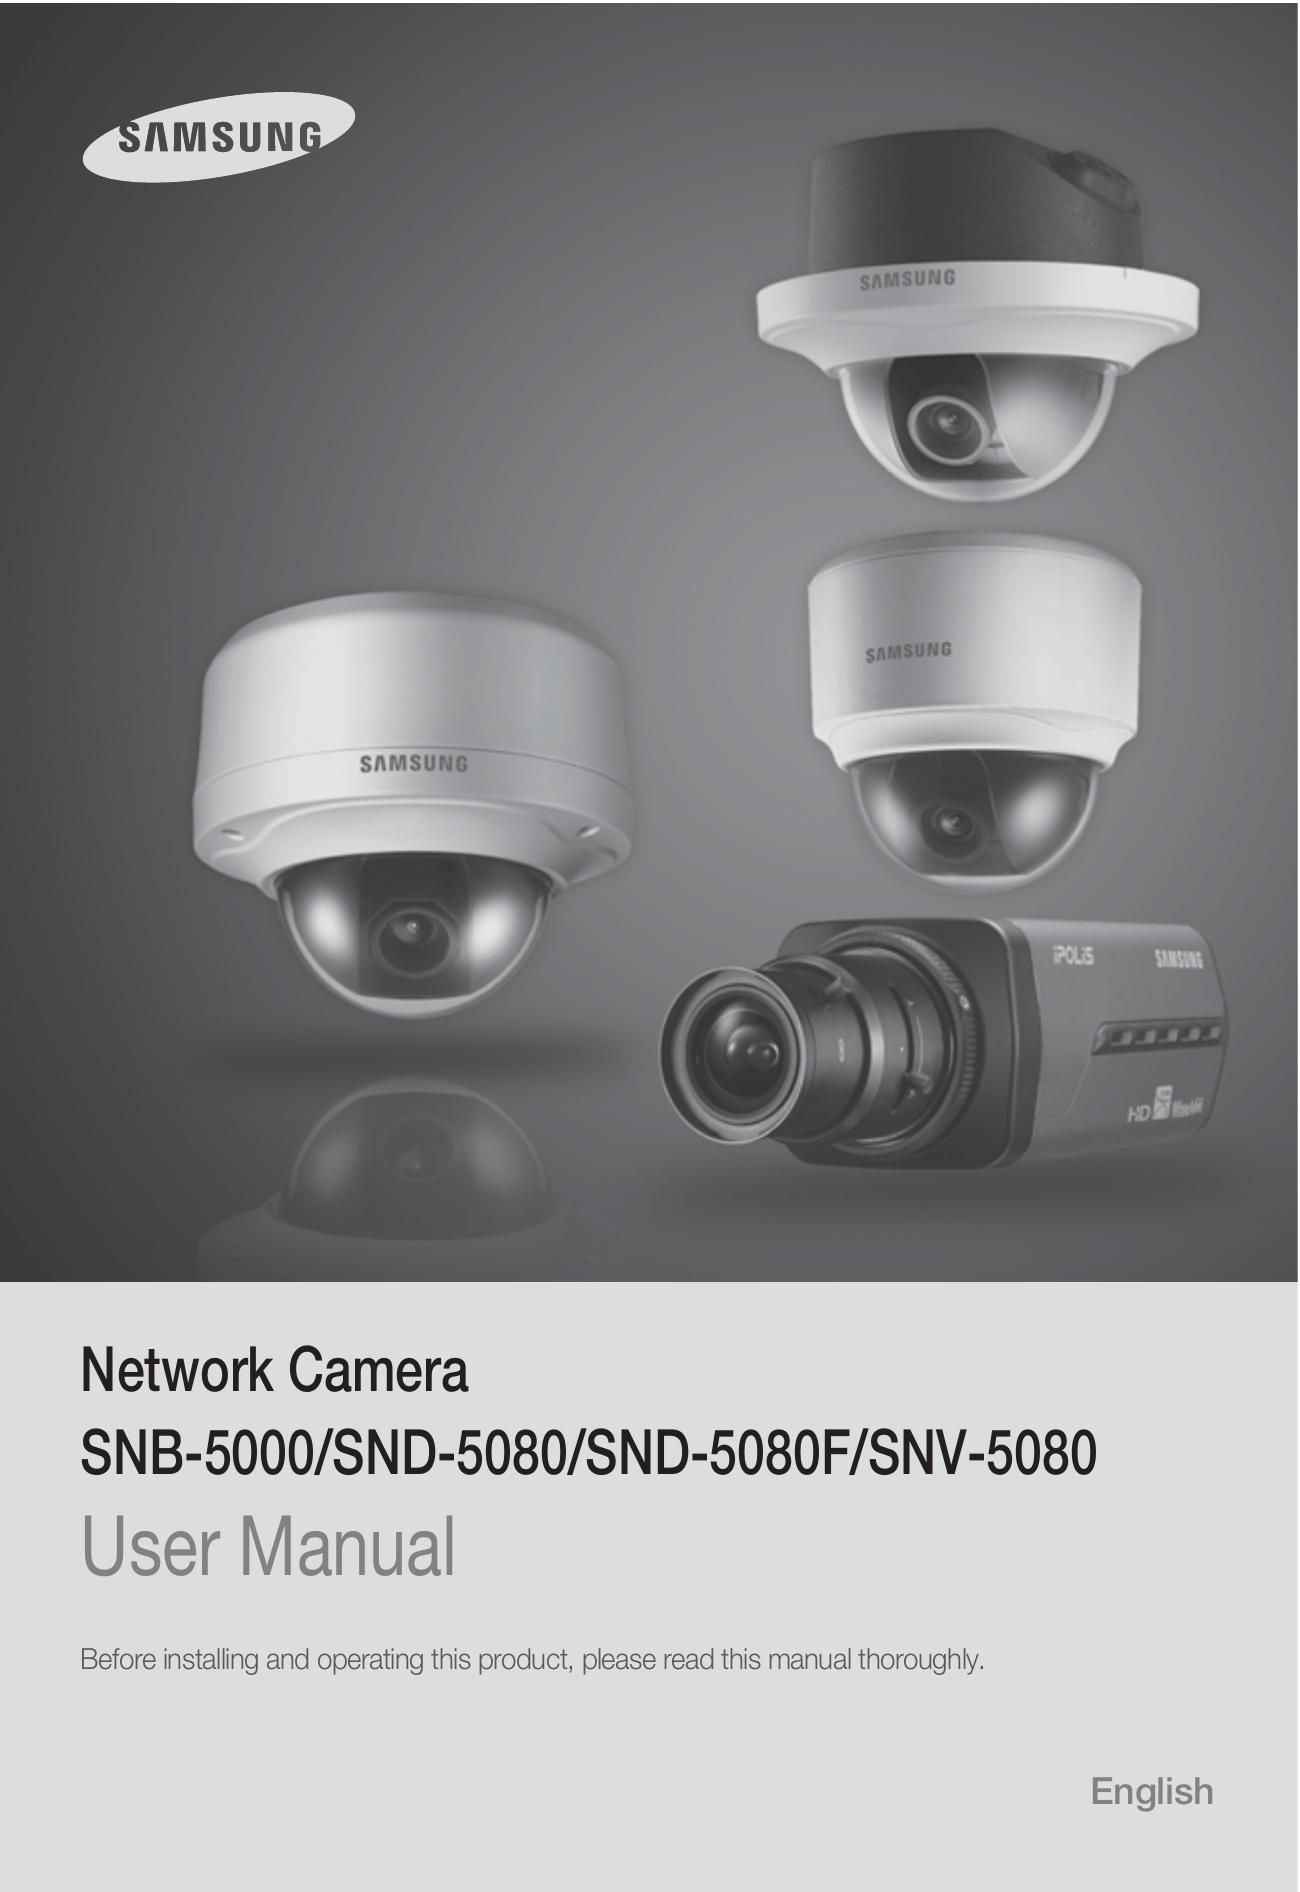 Sharp SND-5080 Security Camera User Manual